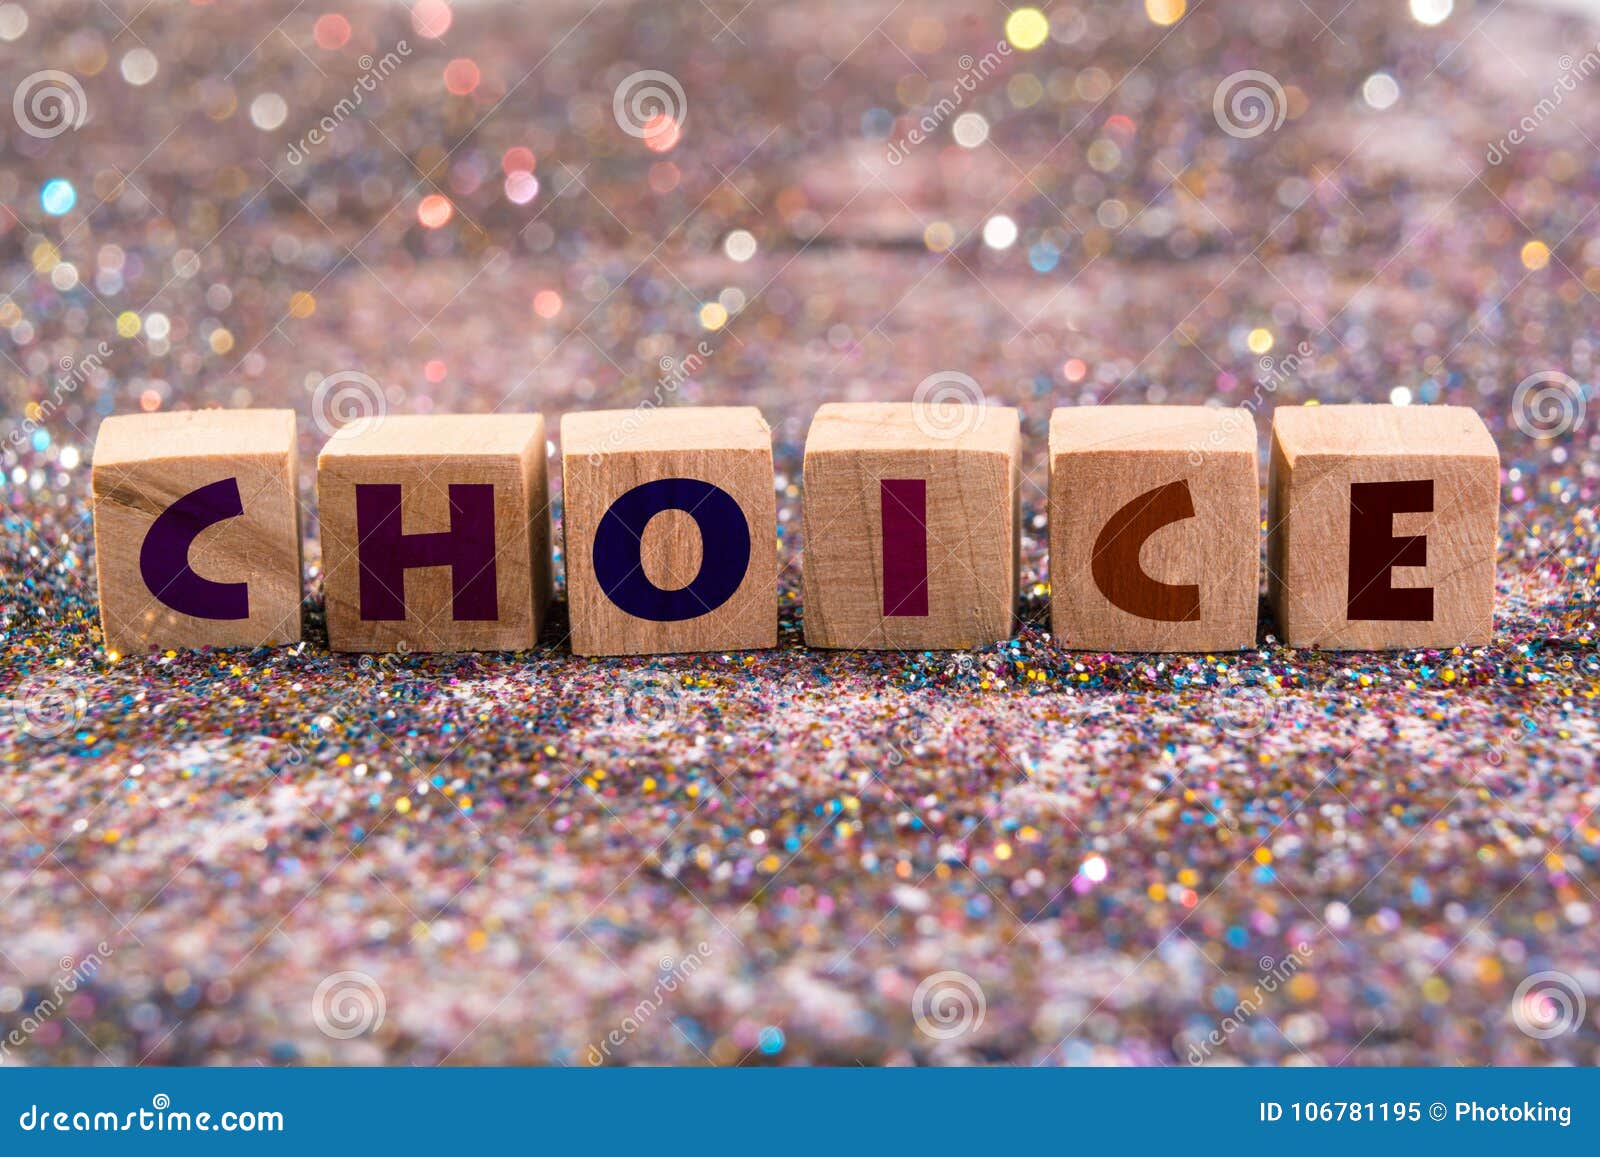 choice word